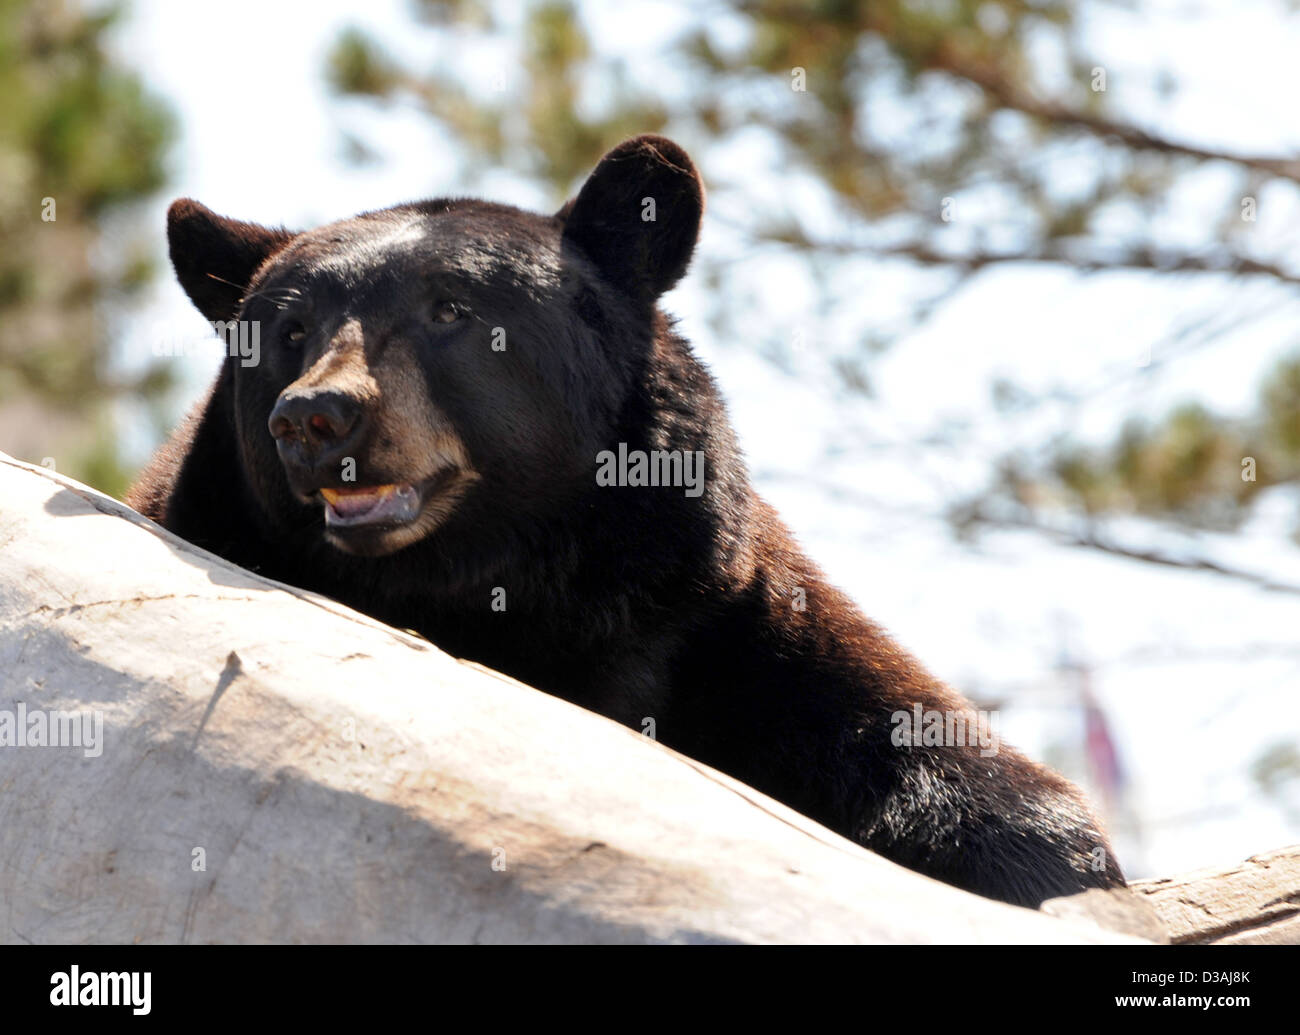 American black bear, black bear, American black bear native to North America, Wyoming,animal, Stock Photo